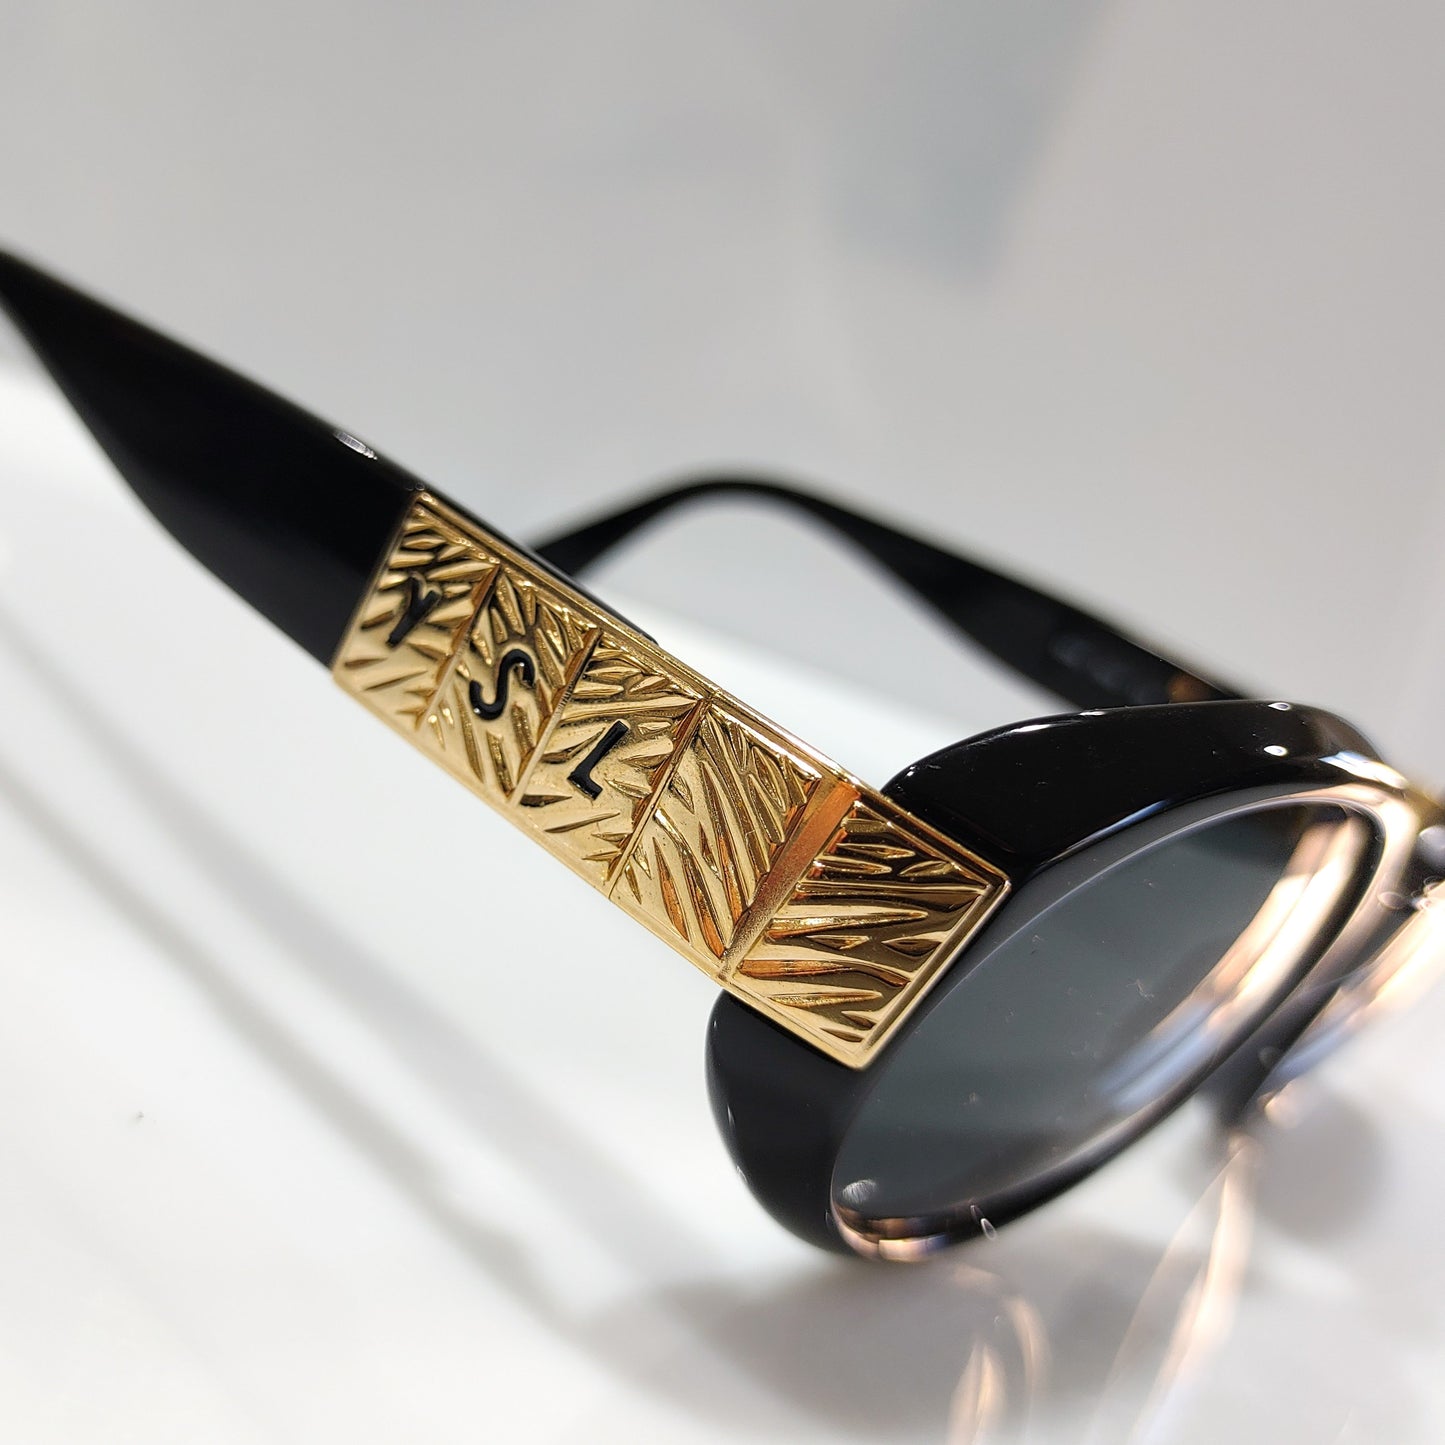 Yves Saint Laurent 6548 occhiali da sole vintage NOS occhiali lunetta brille anni '90